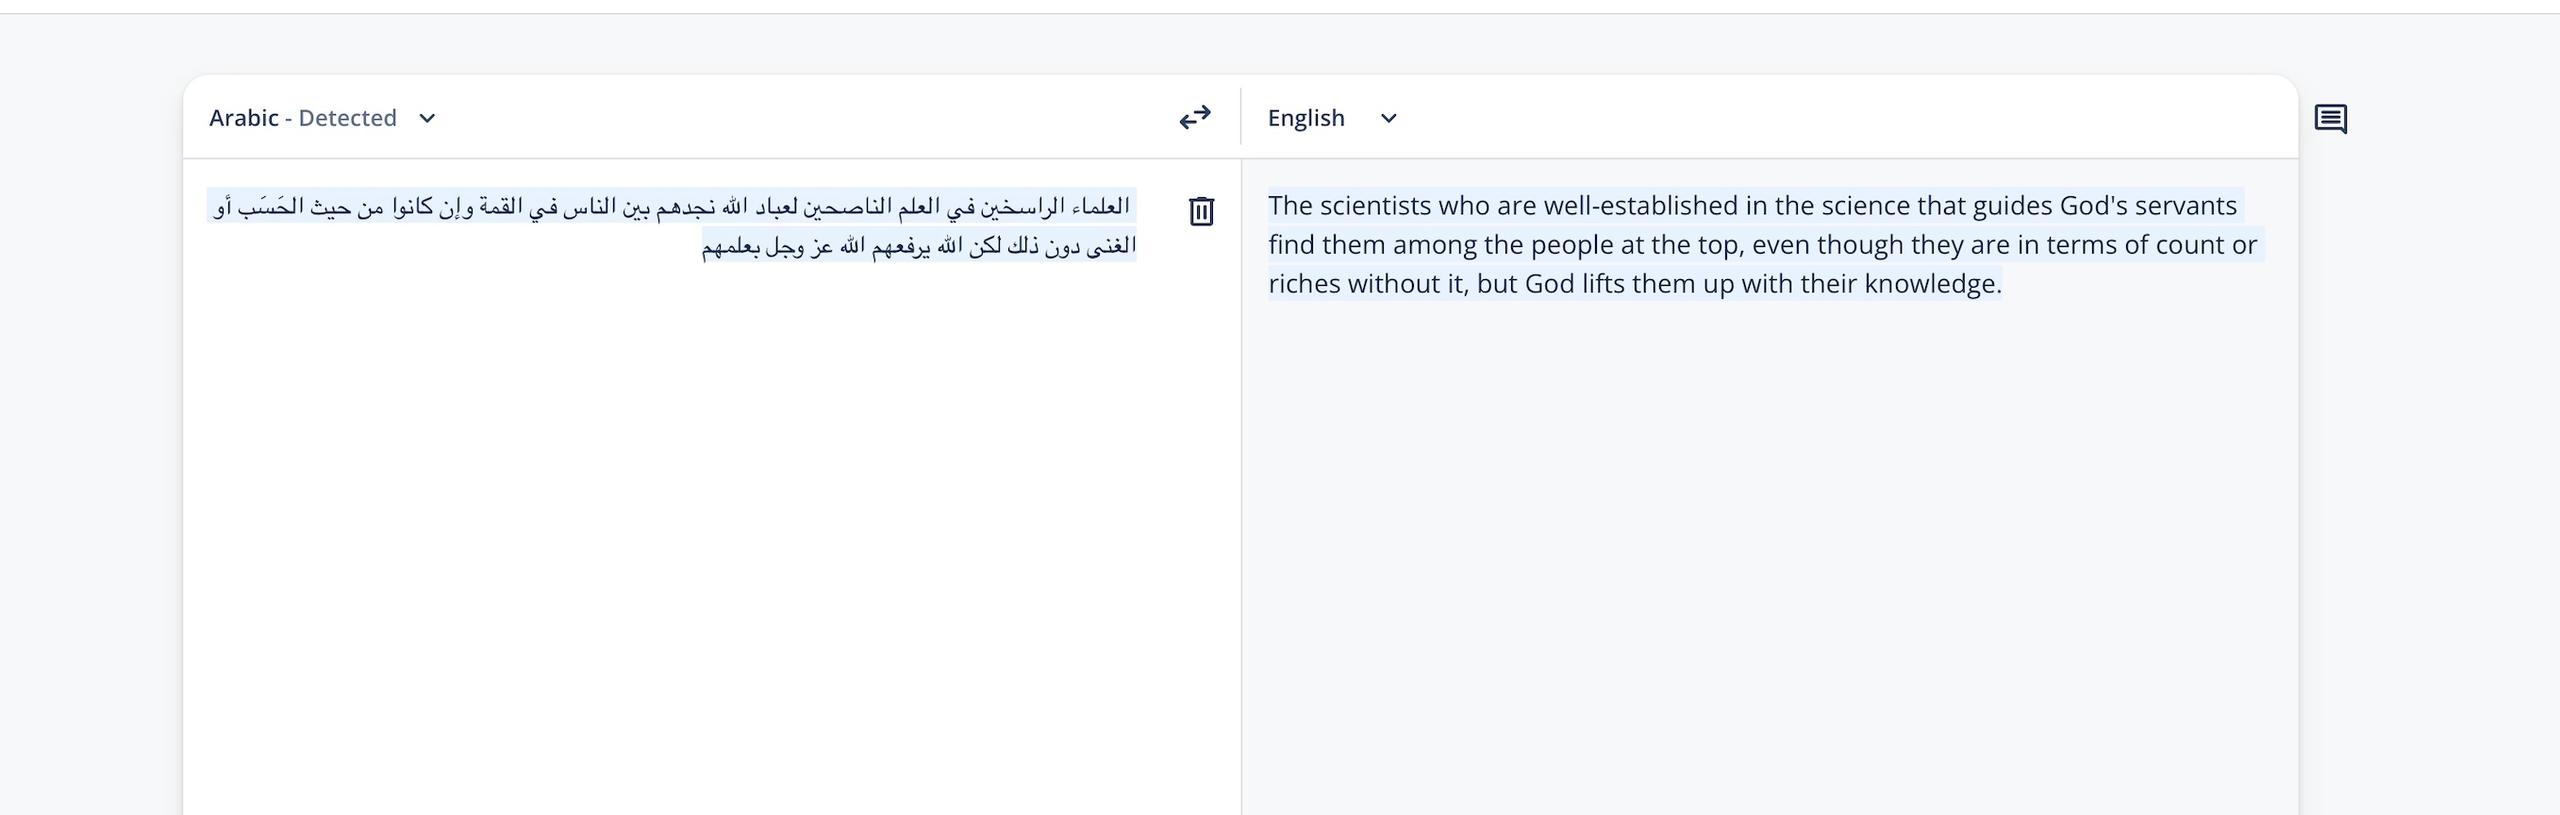 Arabic religious translationjpeg